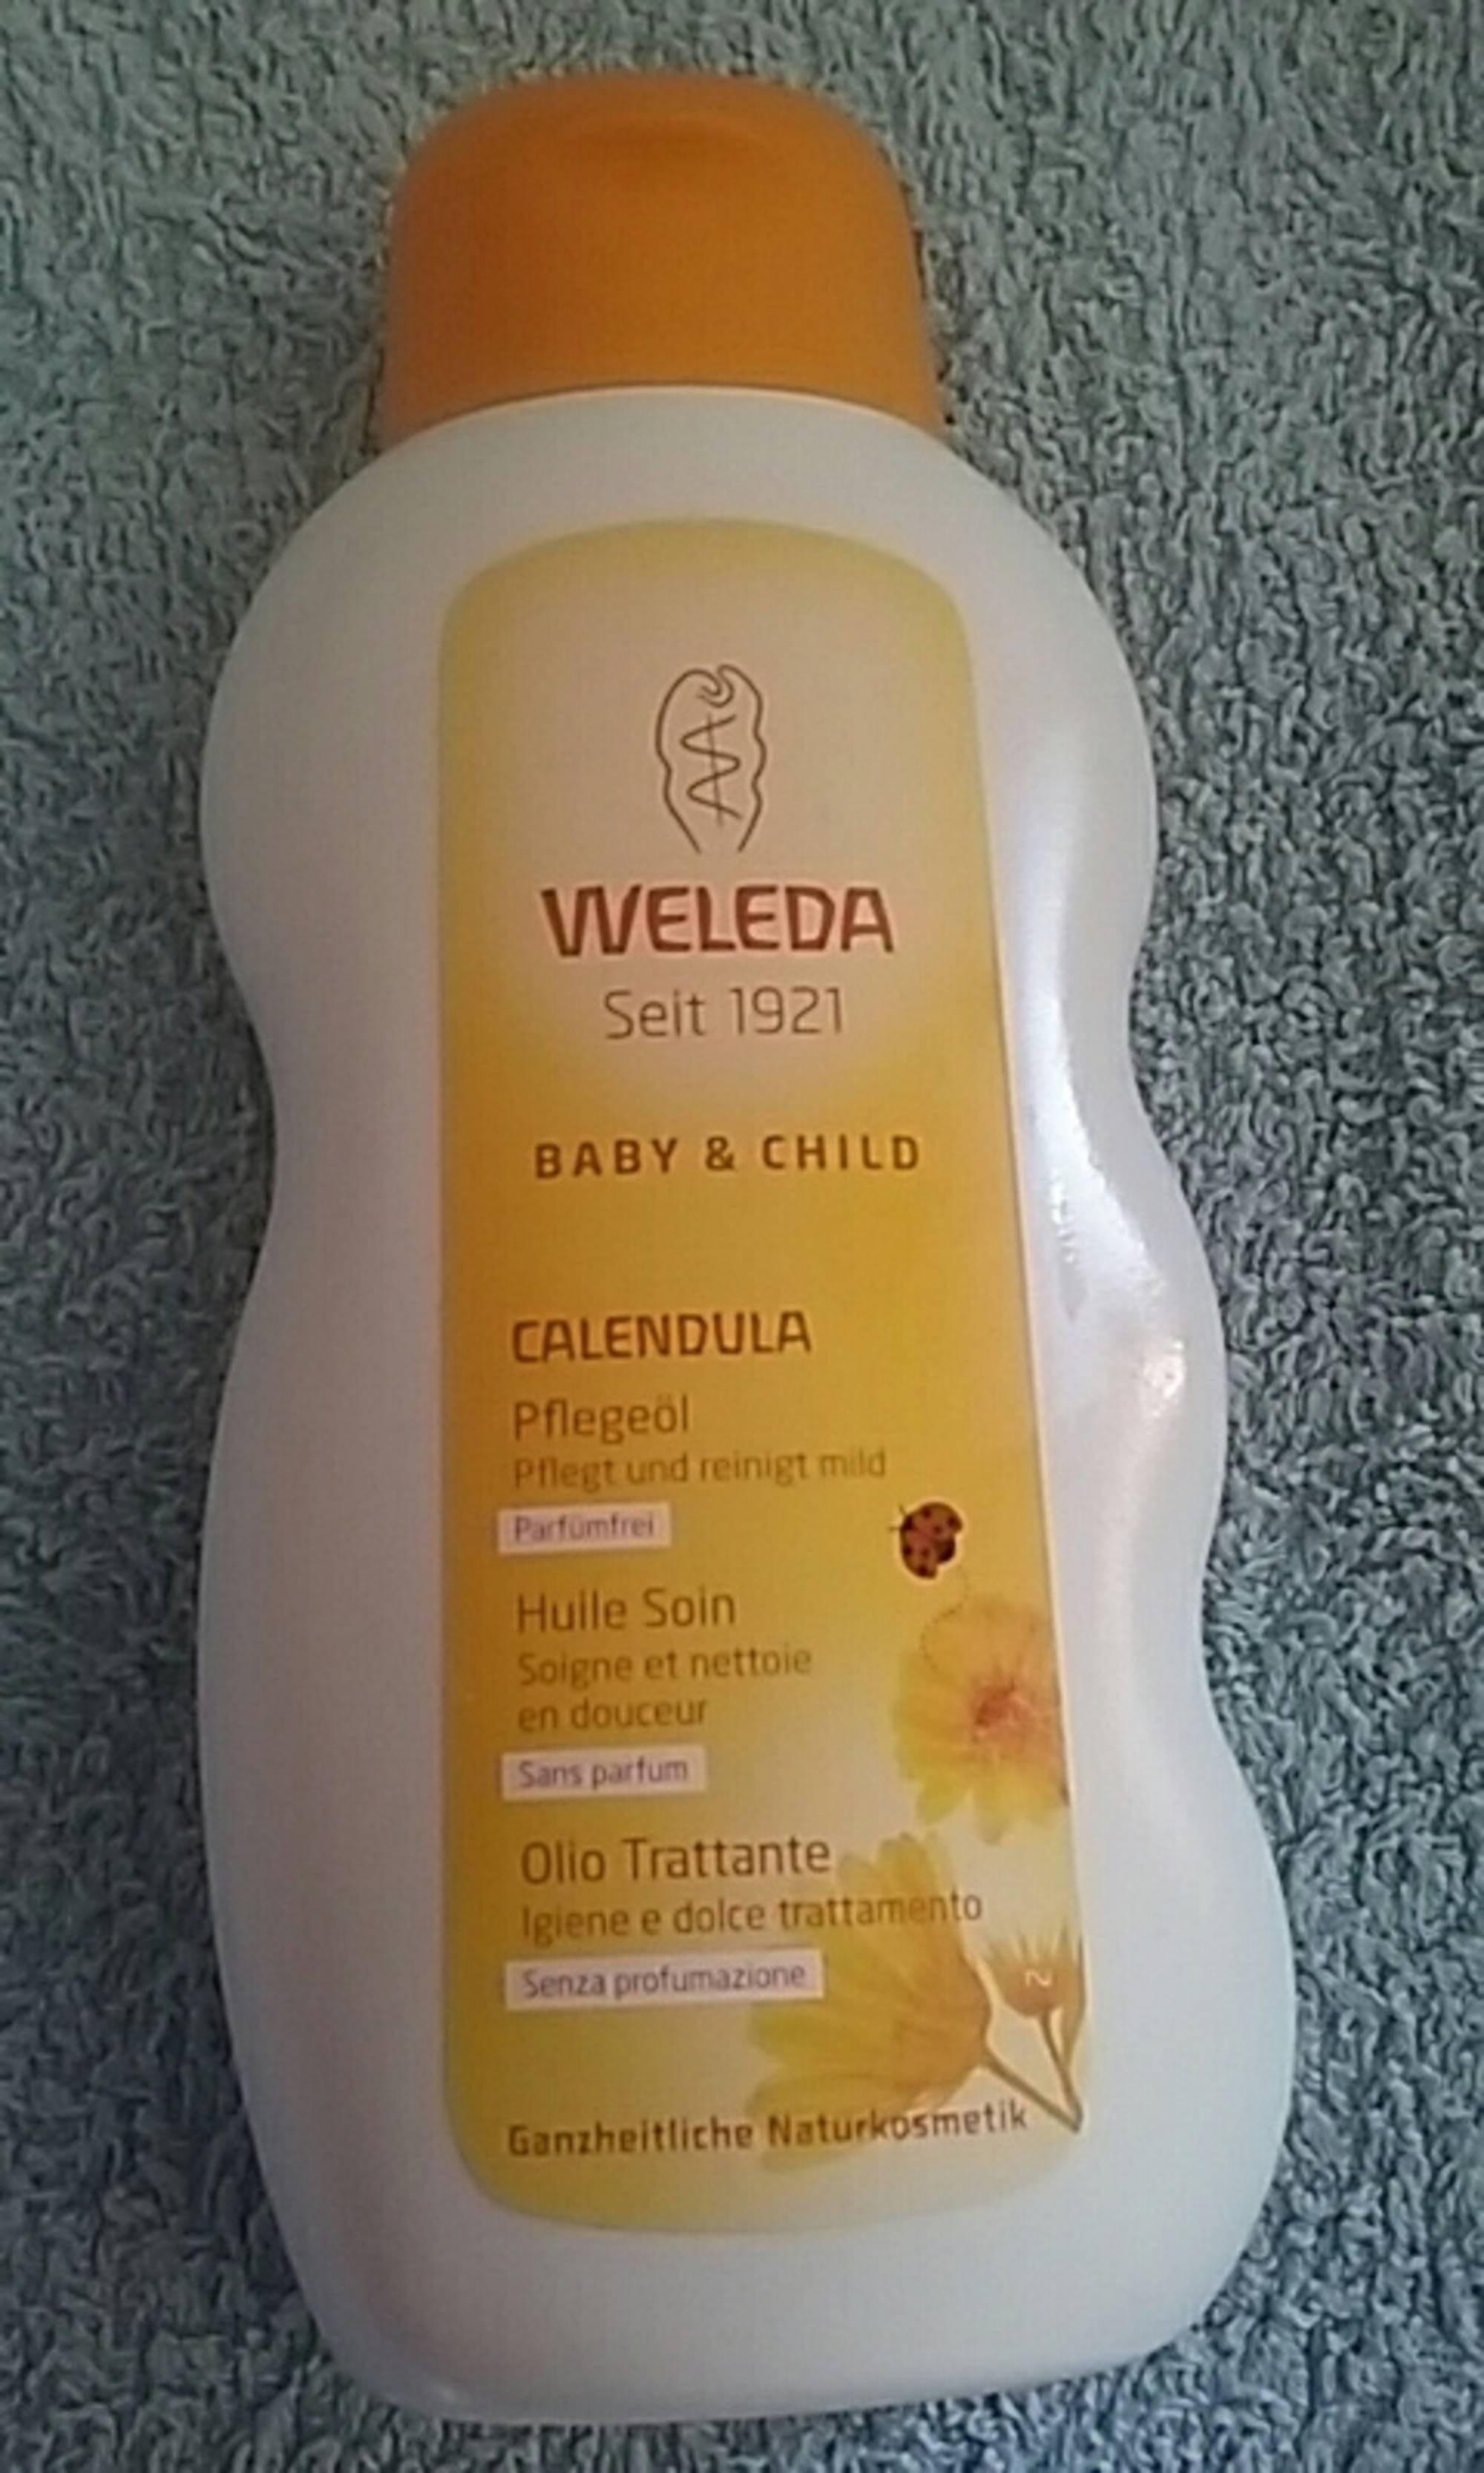 WELEDA - Calendula - Huile soin baby & child